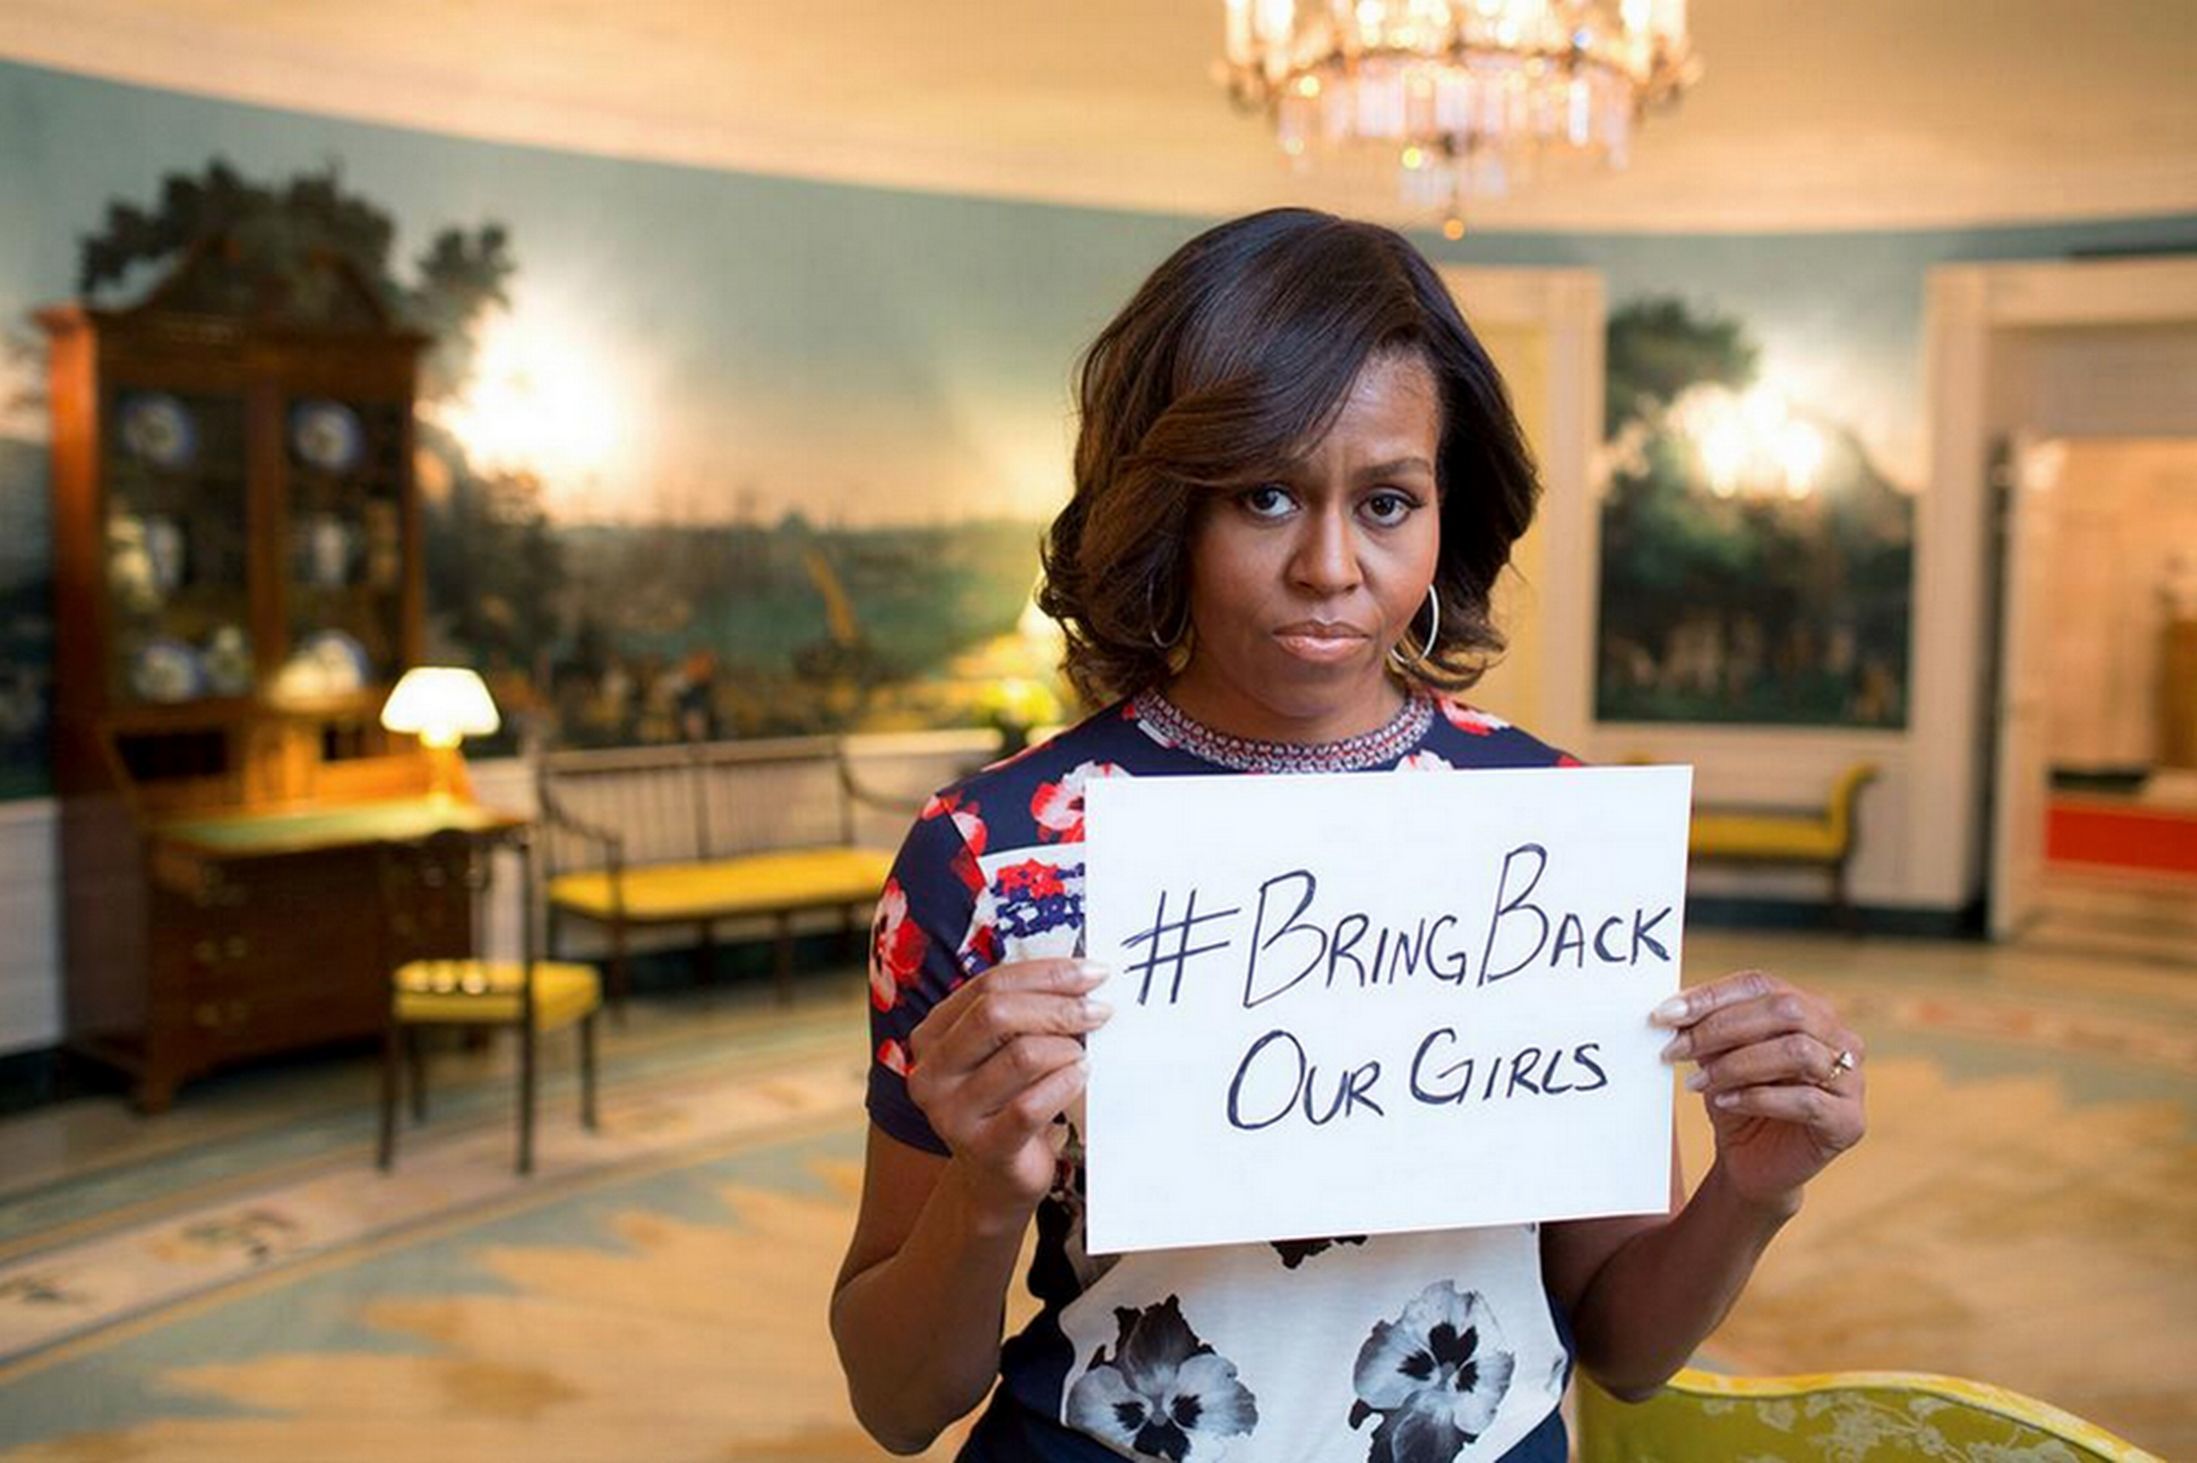 Michelle Obama in response to Boko Haram kidnapping of Chibok schoolgirls